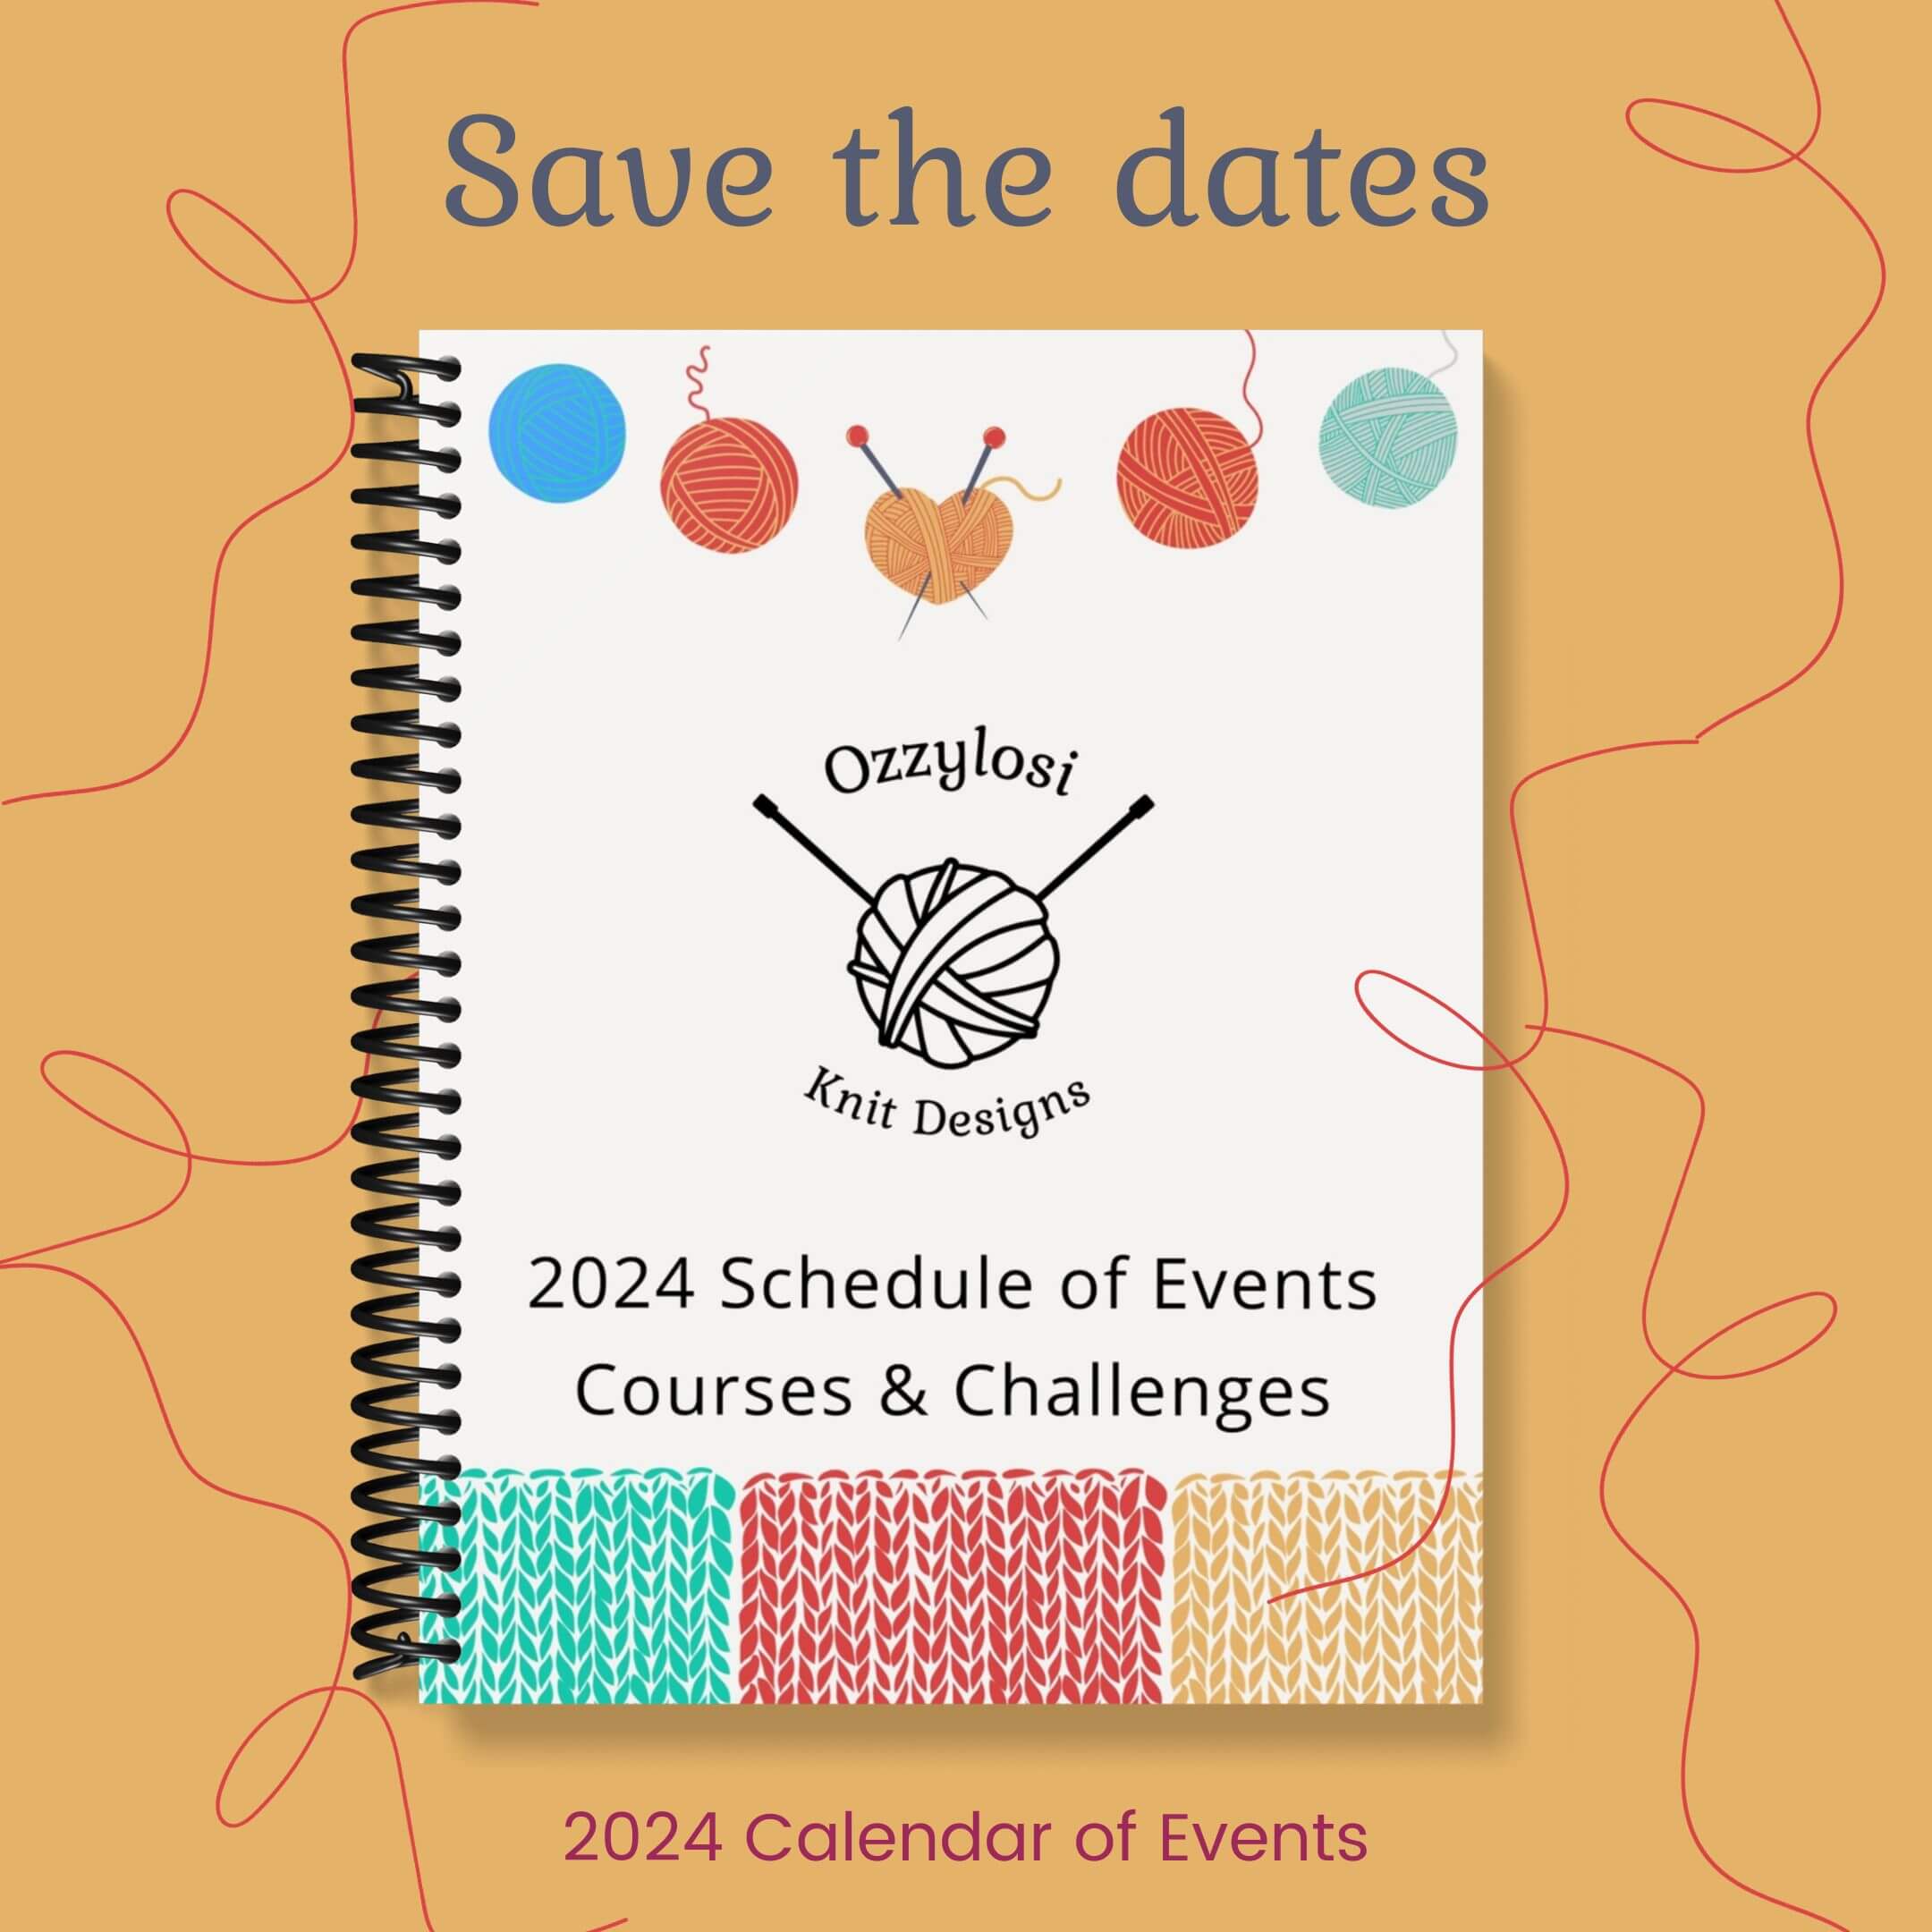 2024 Knitting Calendar of Events